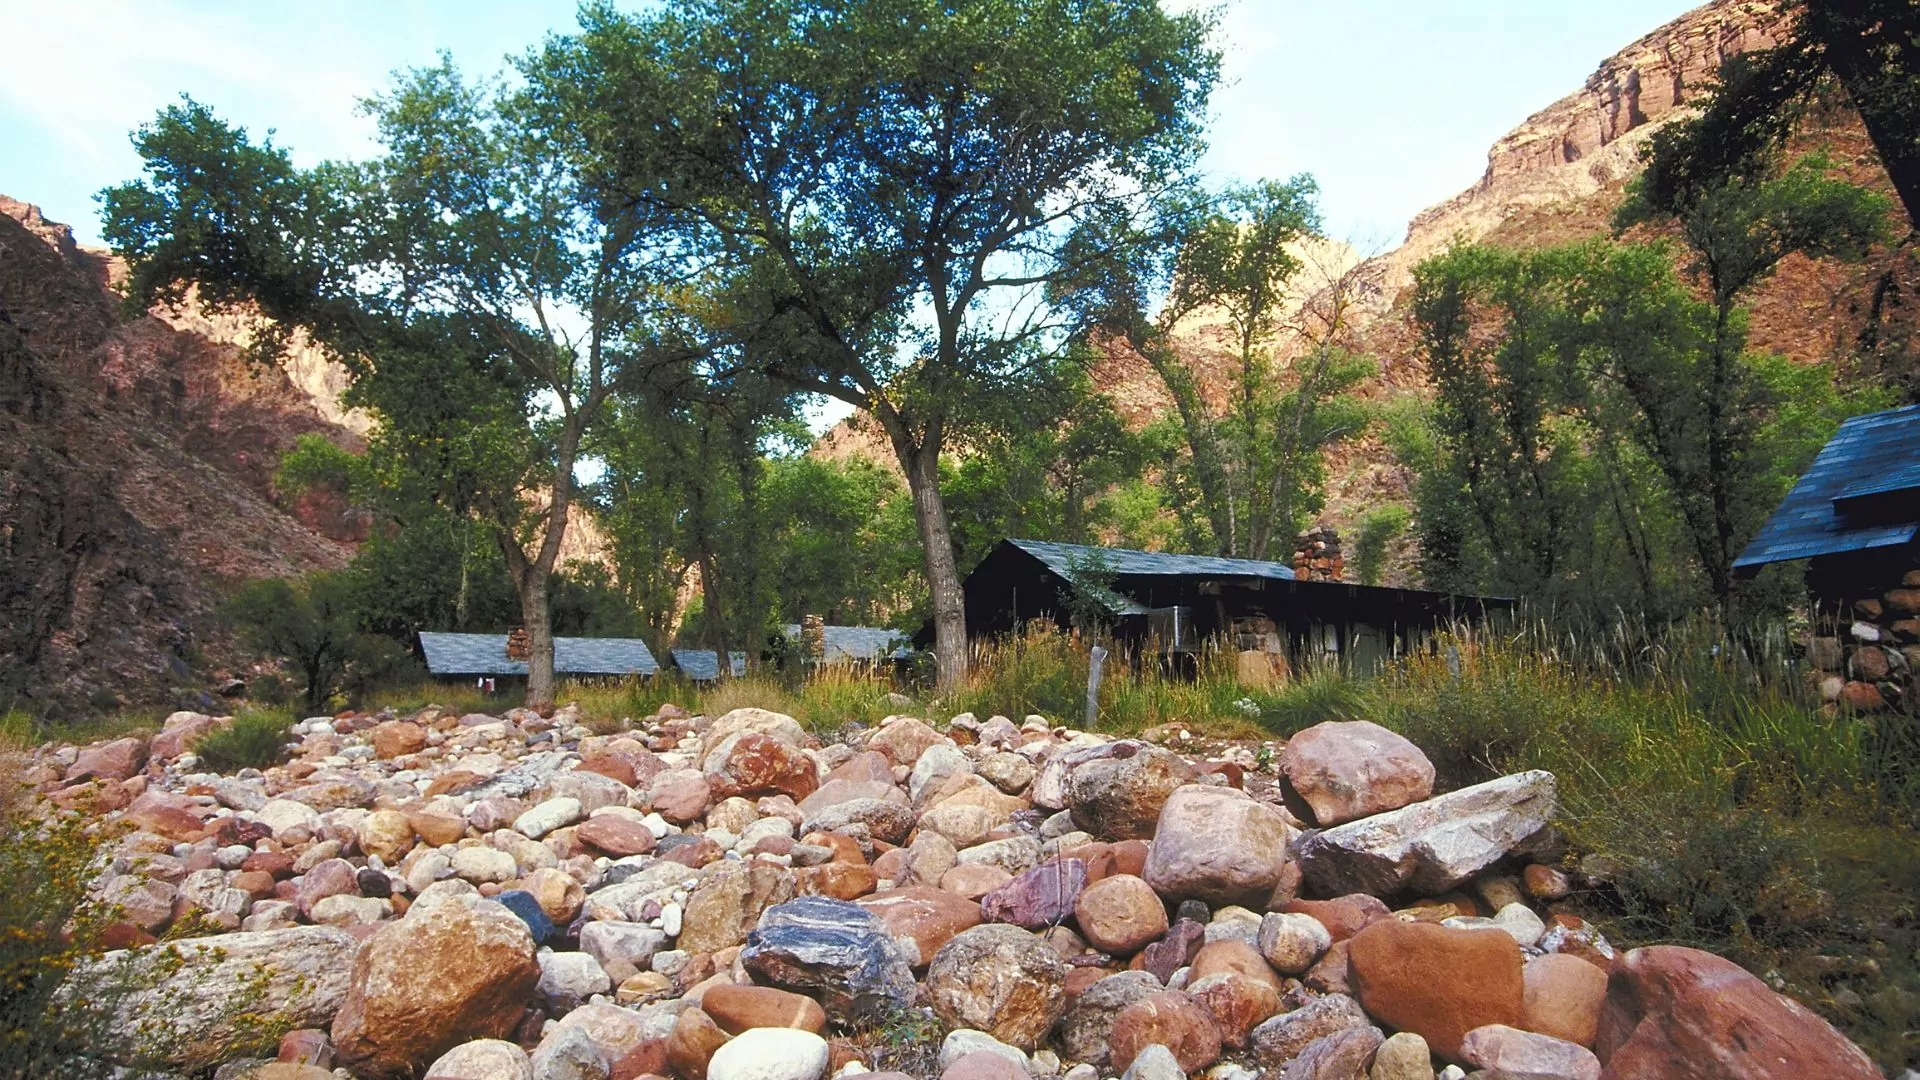 The cabins of Phantom Ranch at Grand Canyon National Park sit far below the rim